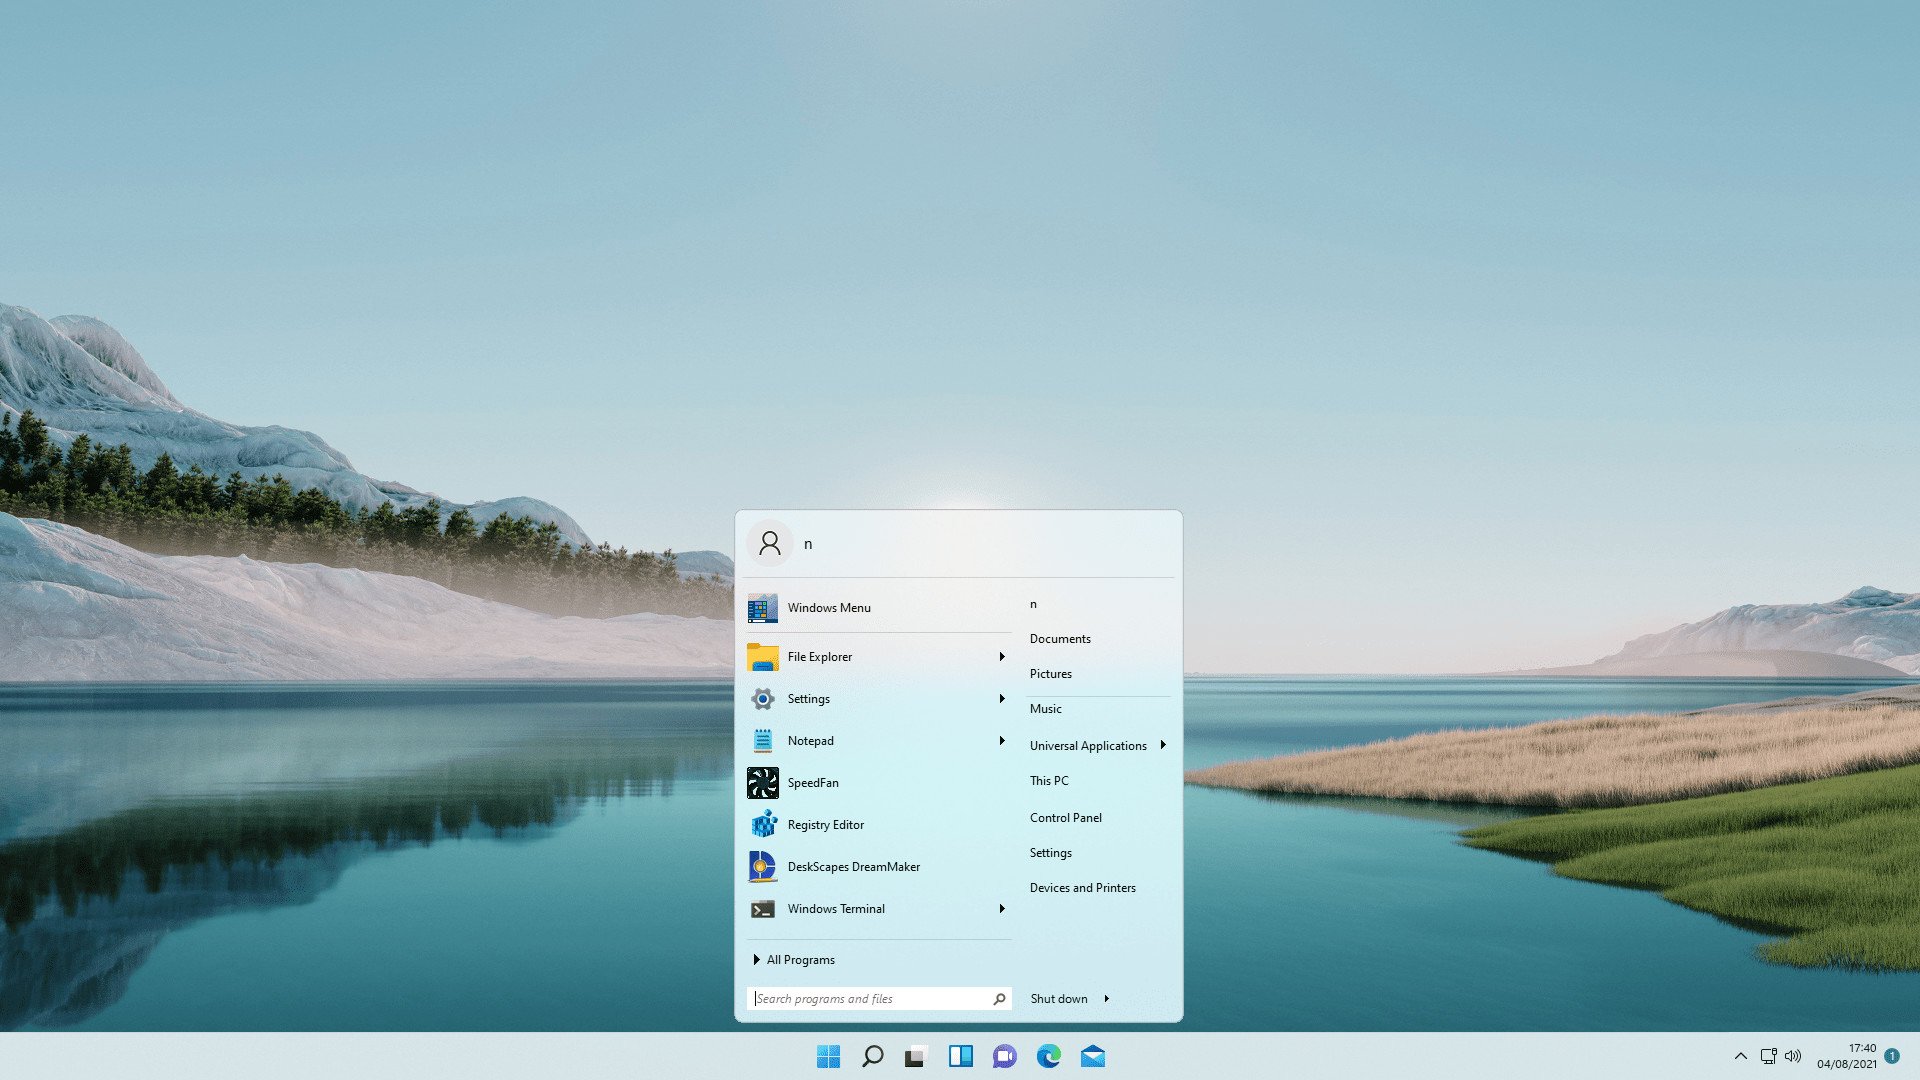 Windows 7 style Start menu on Windows 11